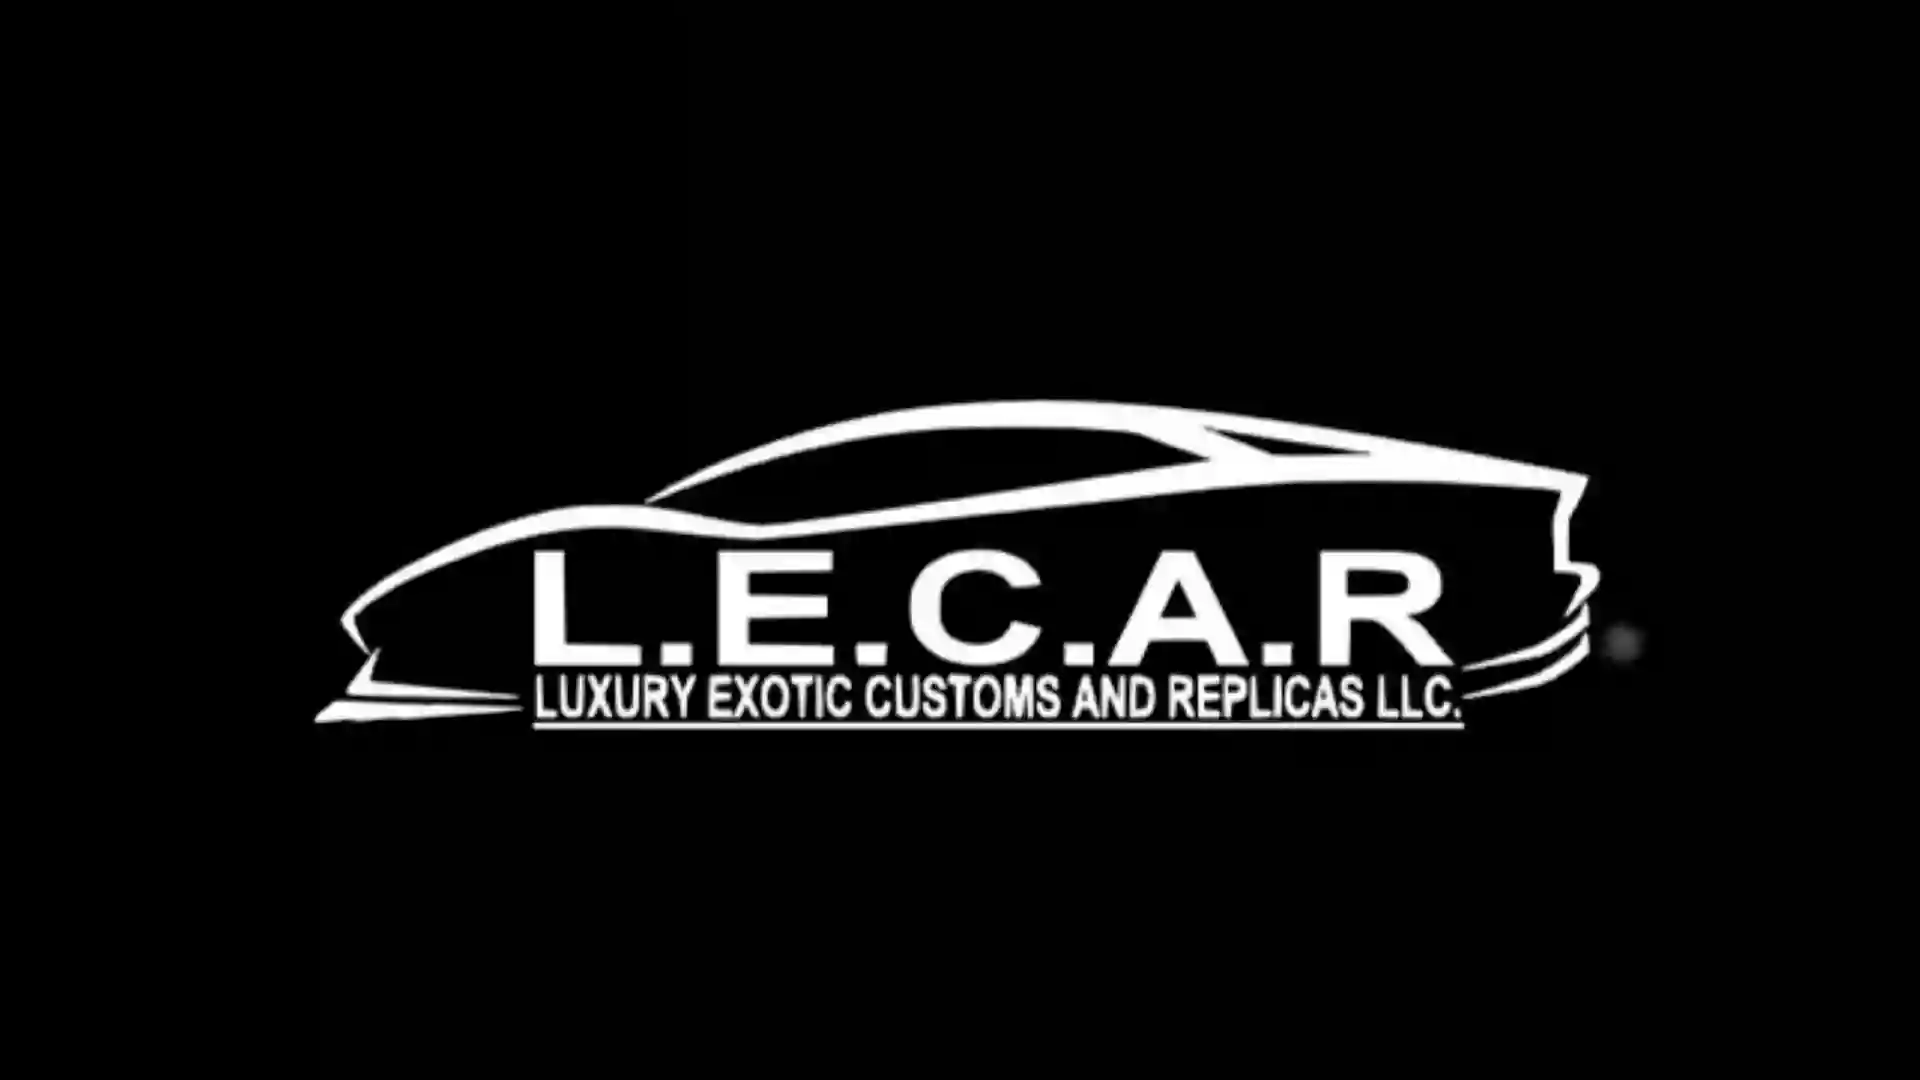 Luxury Exotic Customs and Replicas LLC